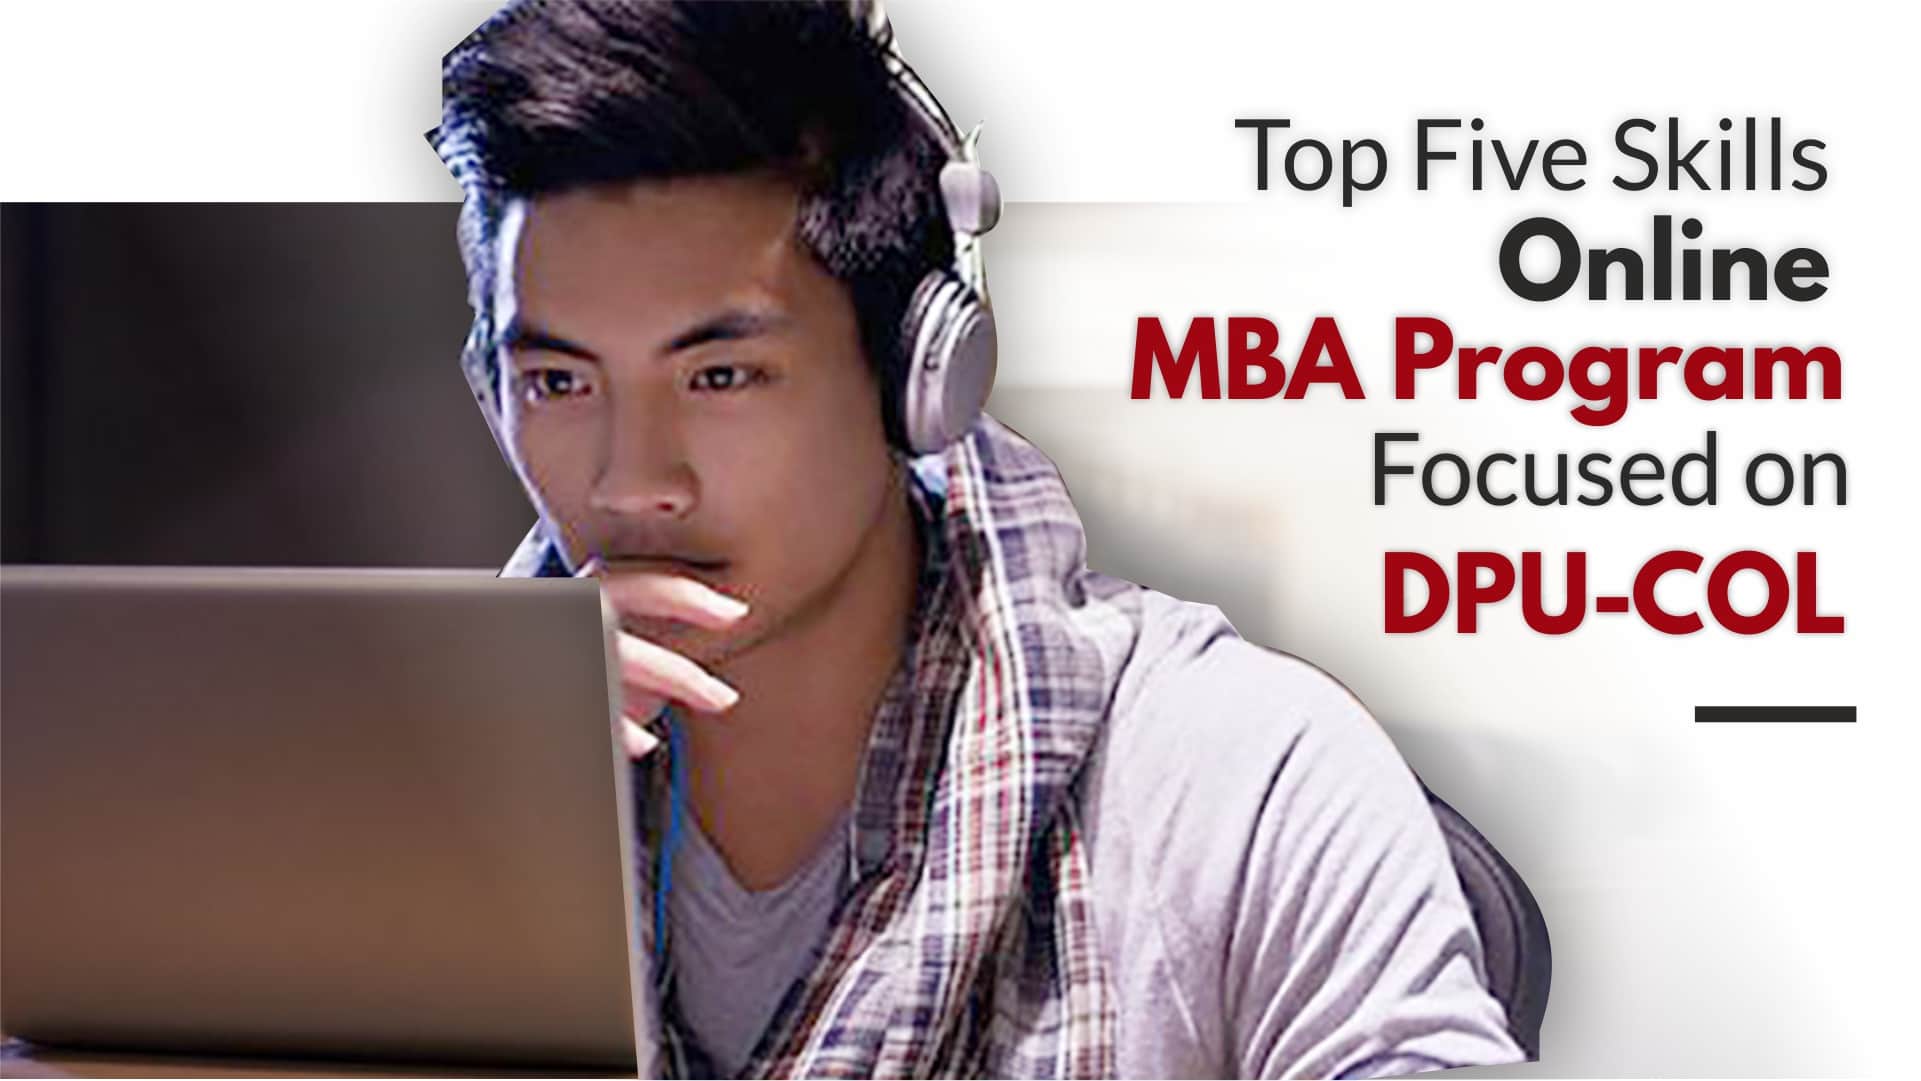 Top Five Skills Online MBA Program Focused on DPU-COL